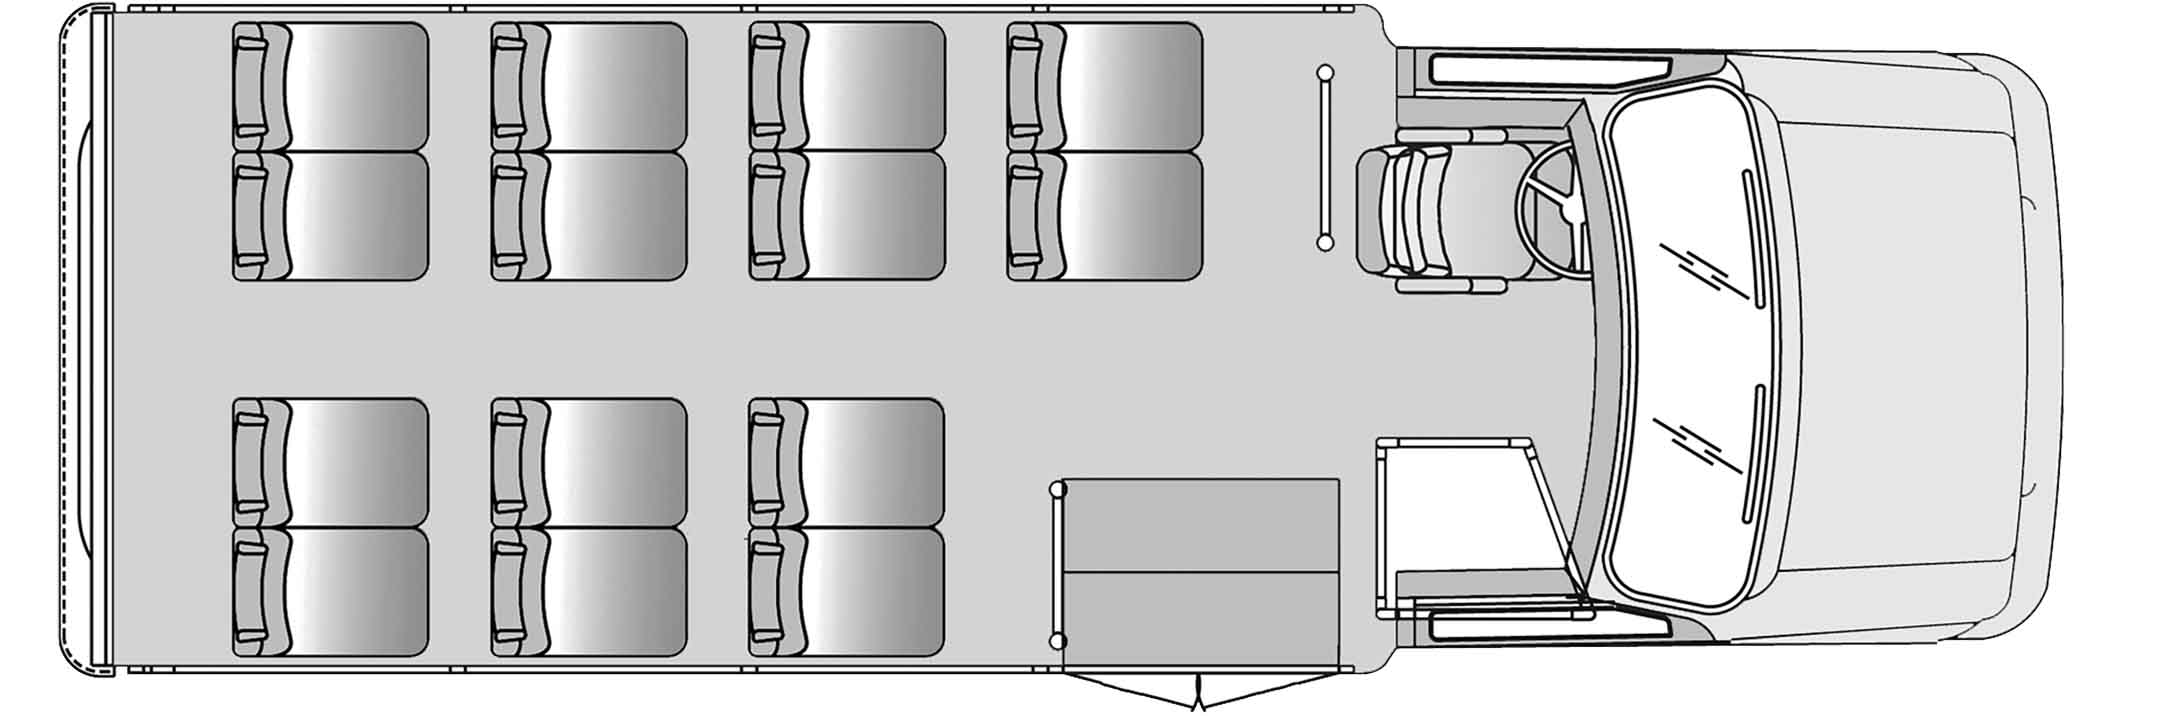 14 Passenger With Rear Cargo Area Plus Driver Floorplan Image